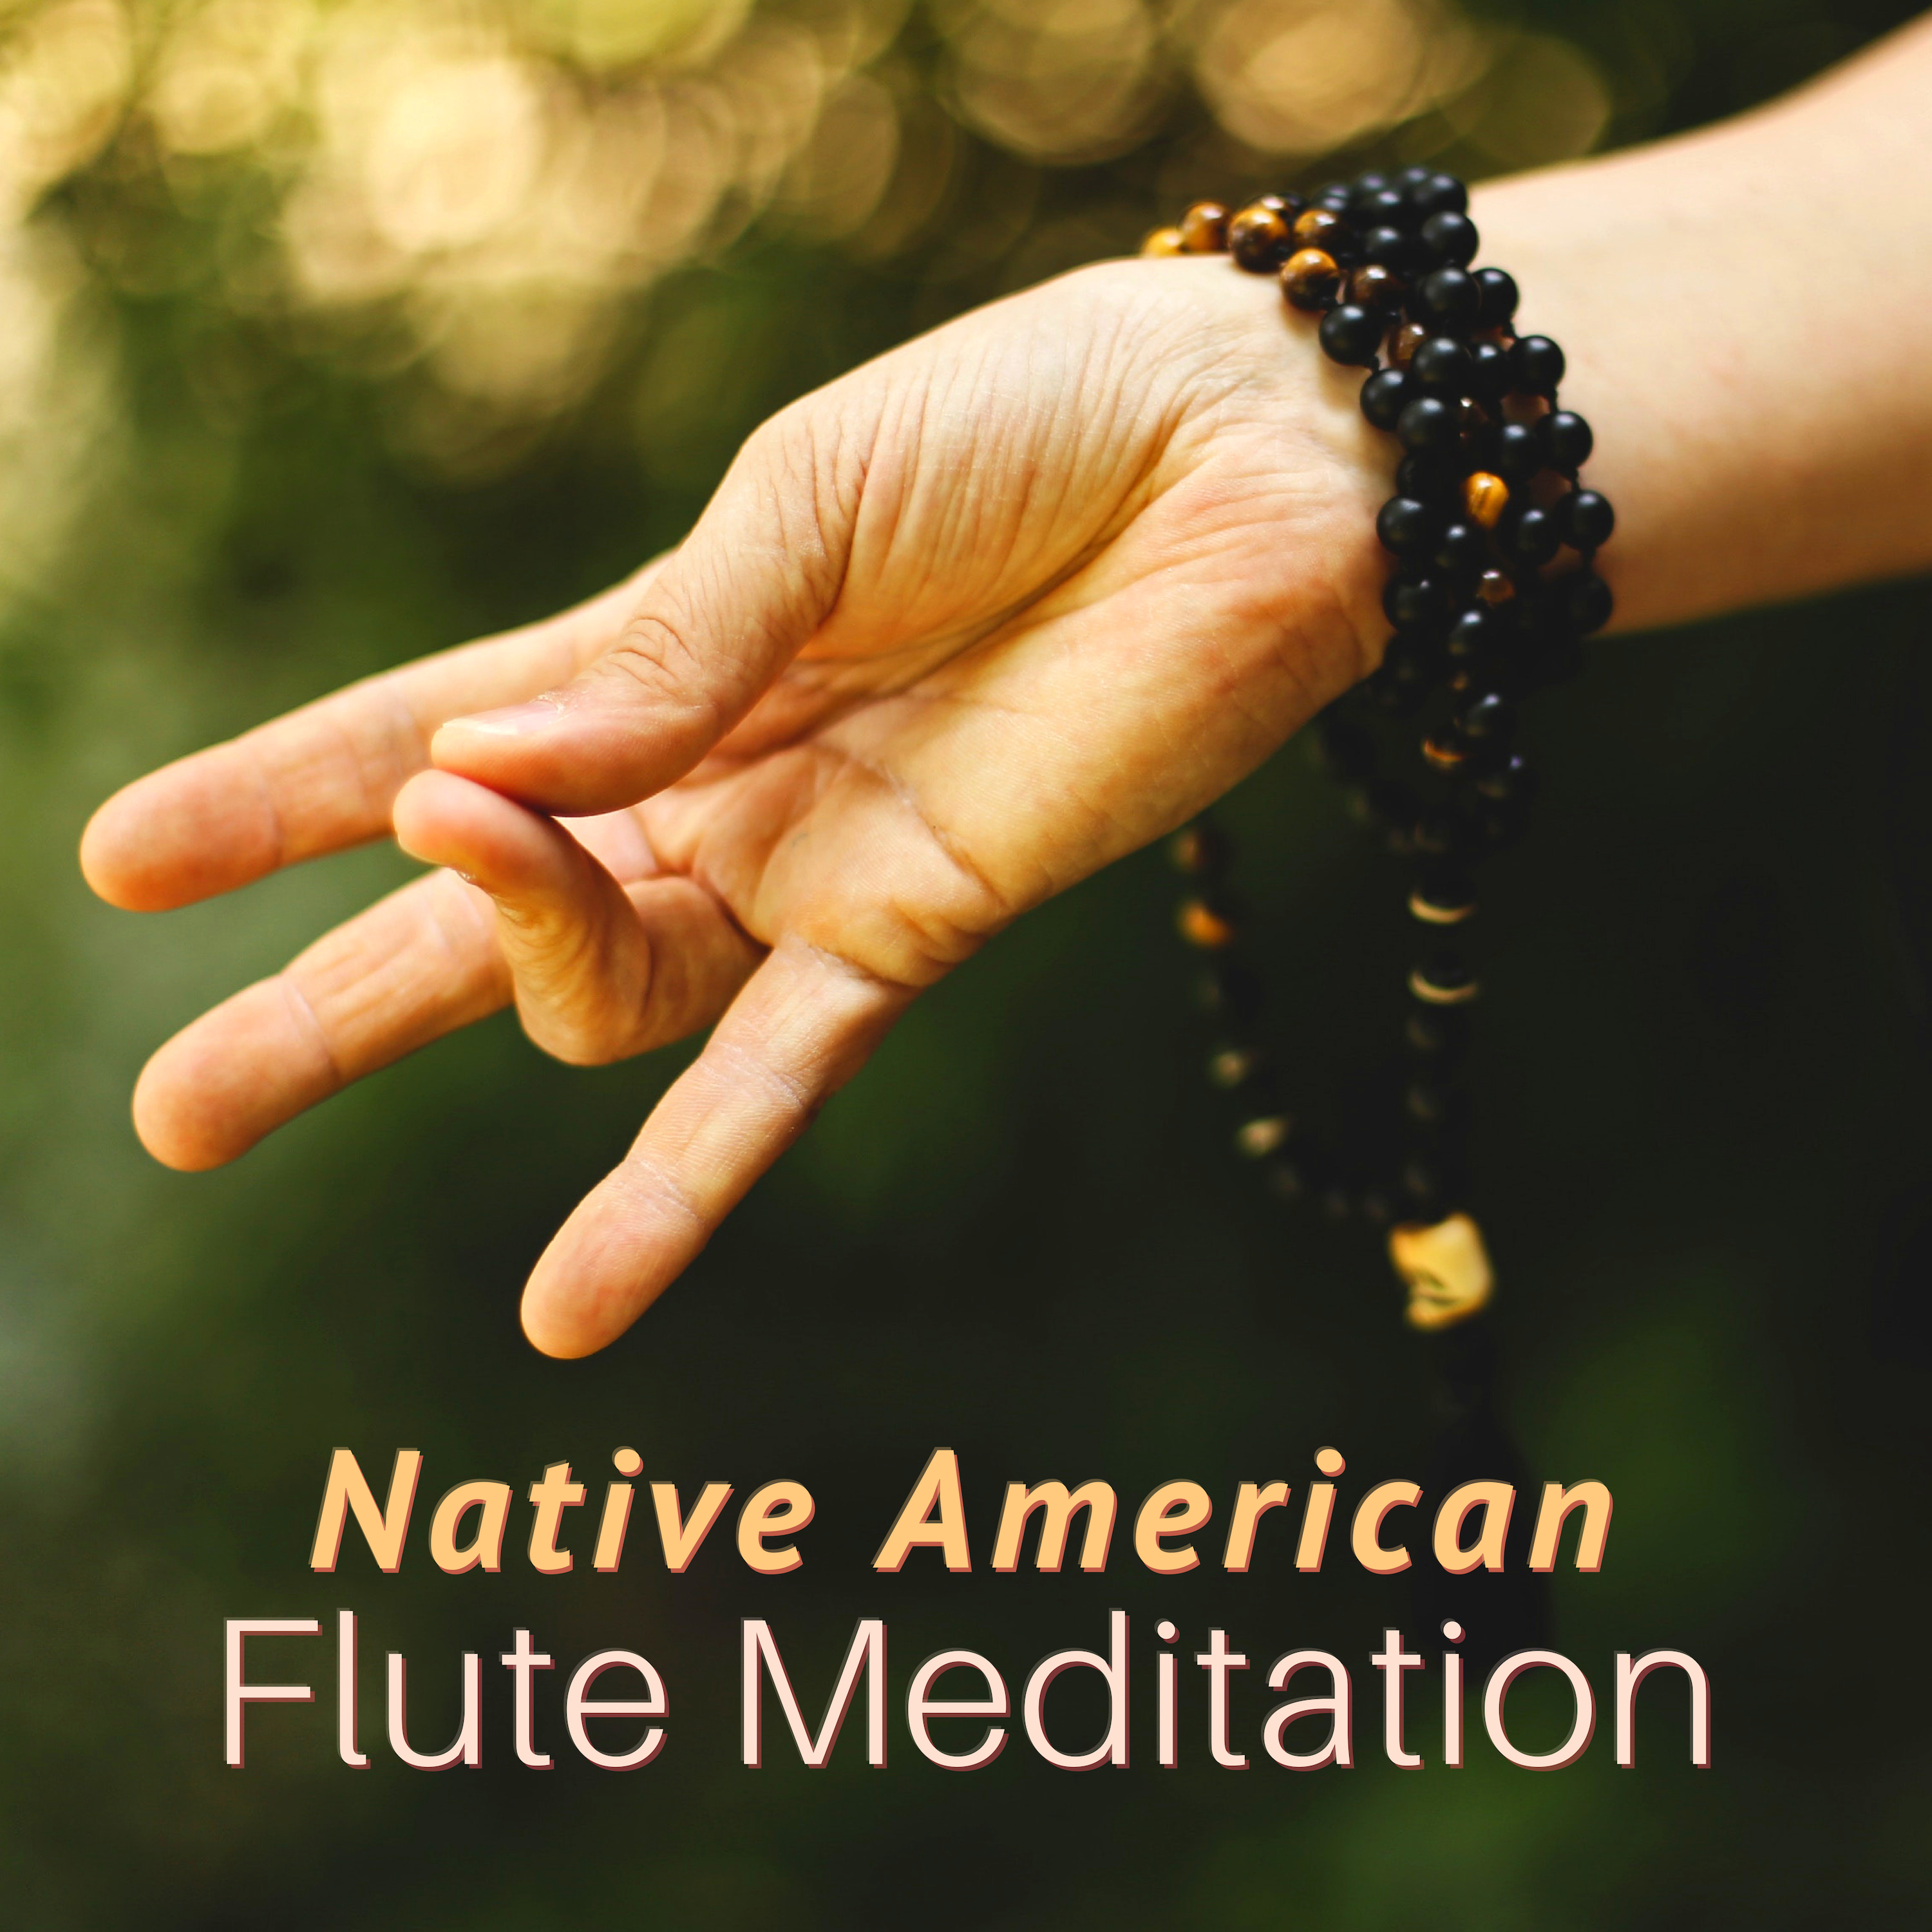 Native American Flute Meditation - For Massage, Spa, Yoga